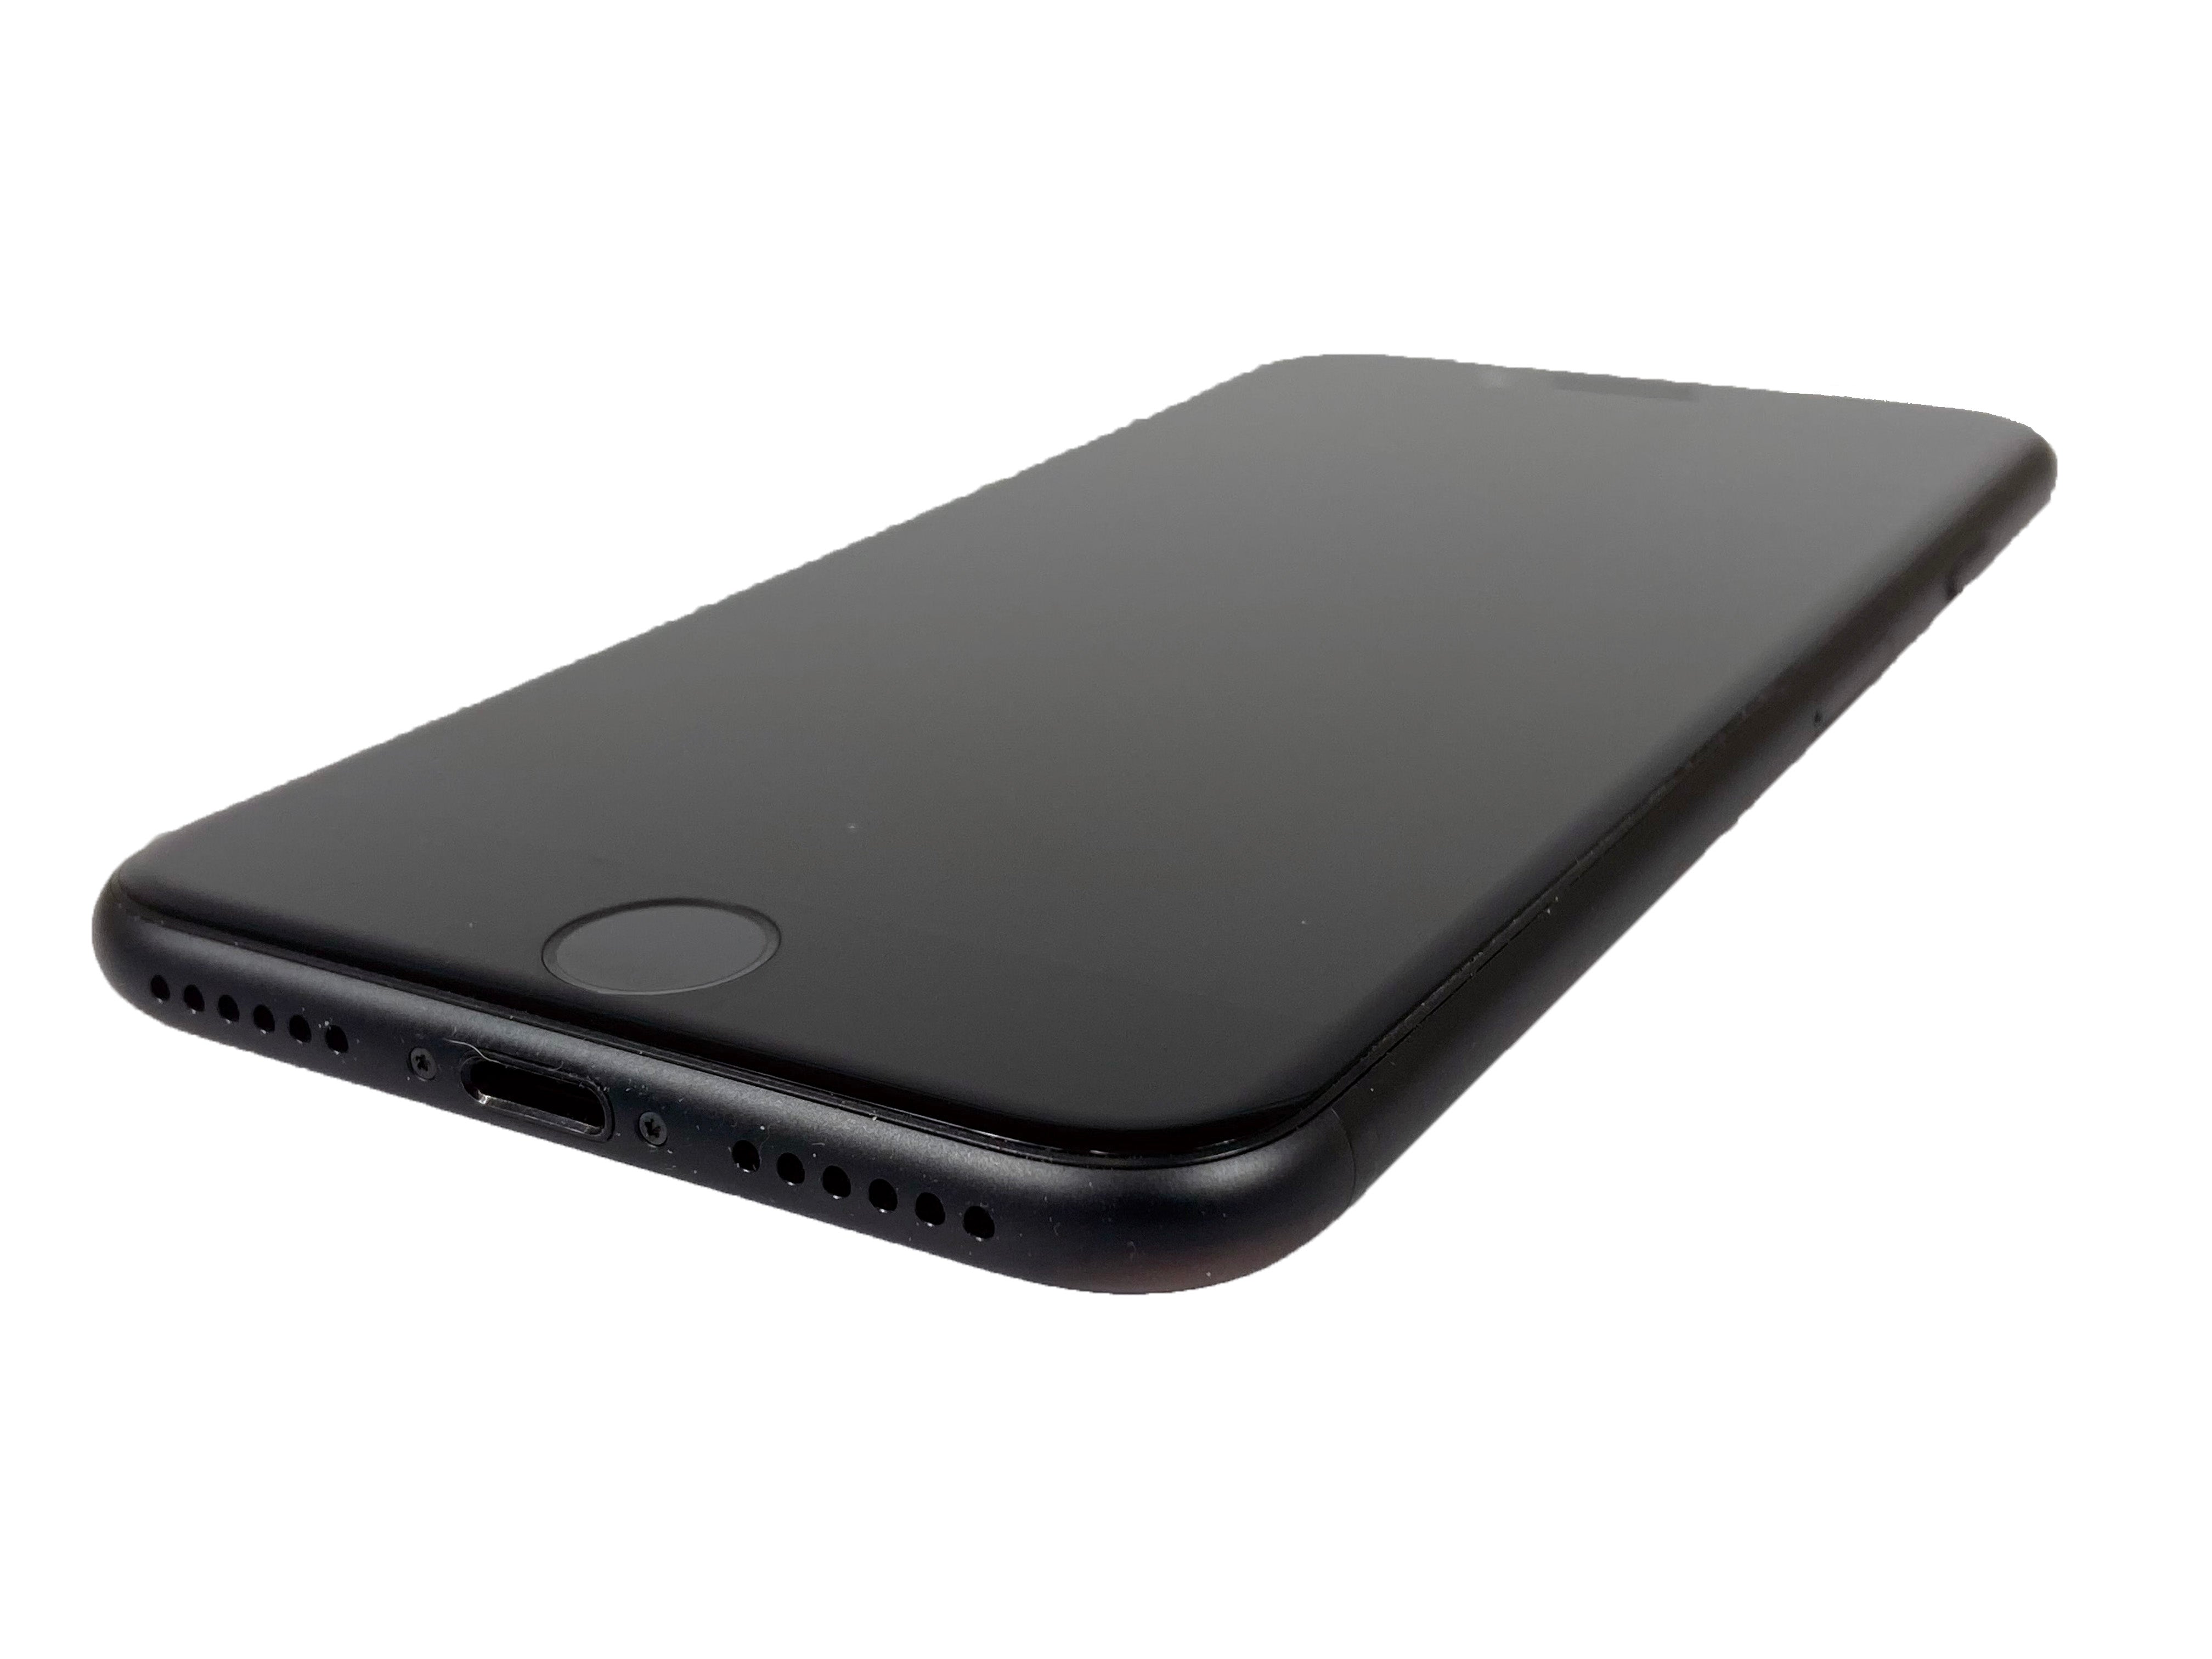 Apple iPhone 7 4.7in Black Verizon